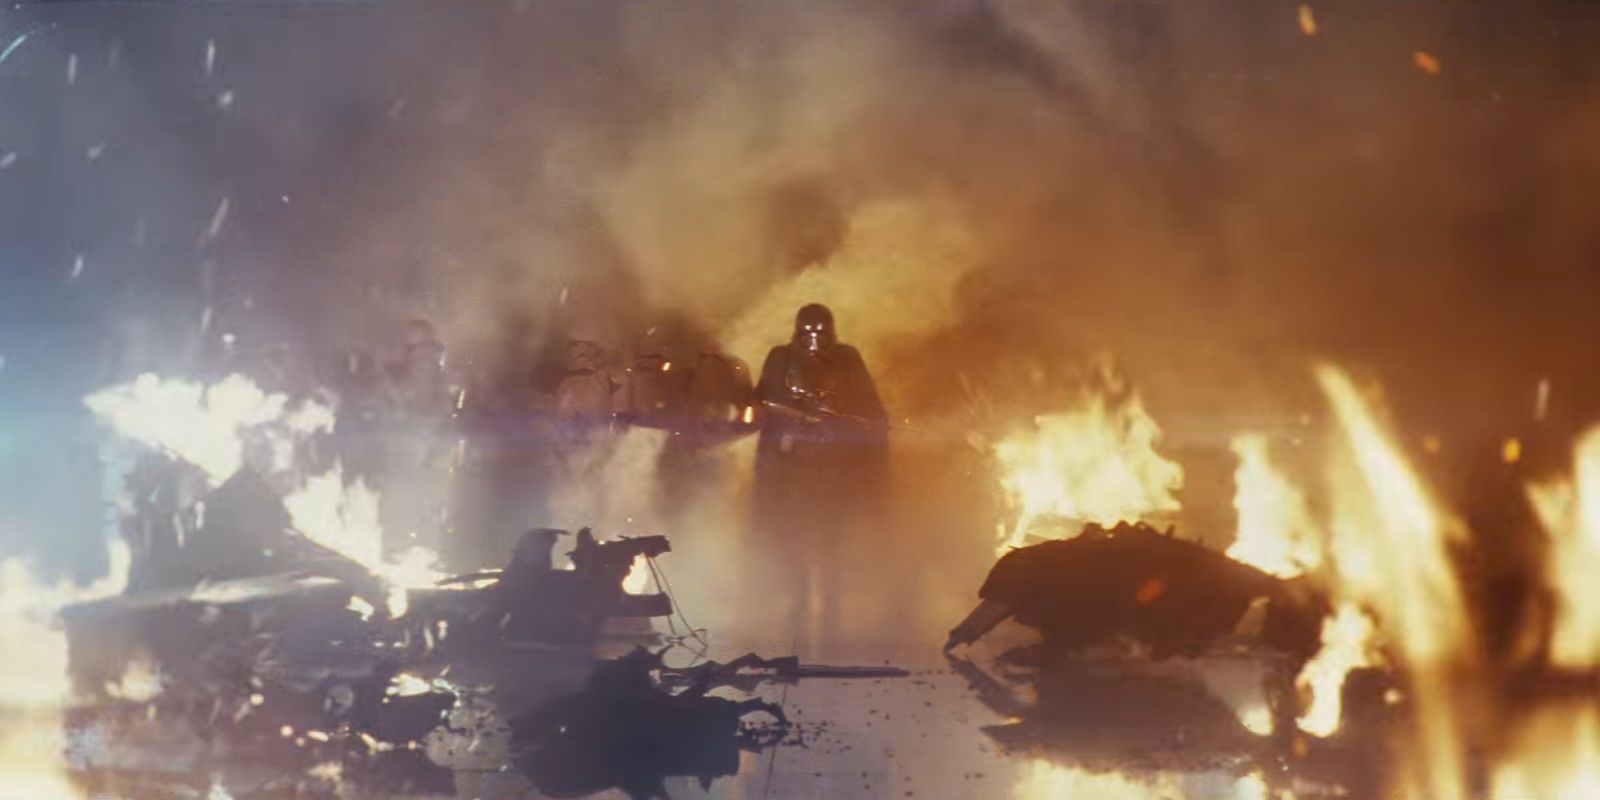 Star Wars The Last Jedi teaser trailer - Stormtroopers